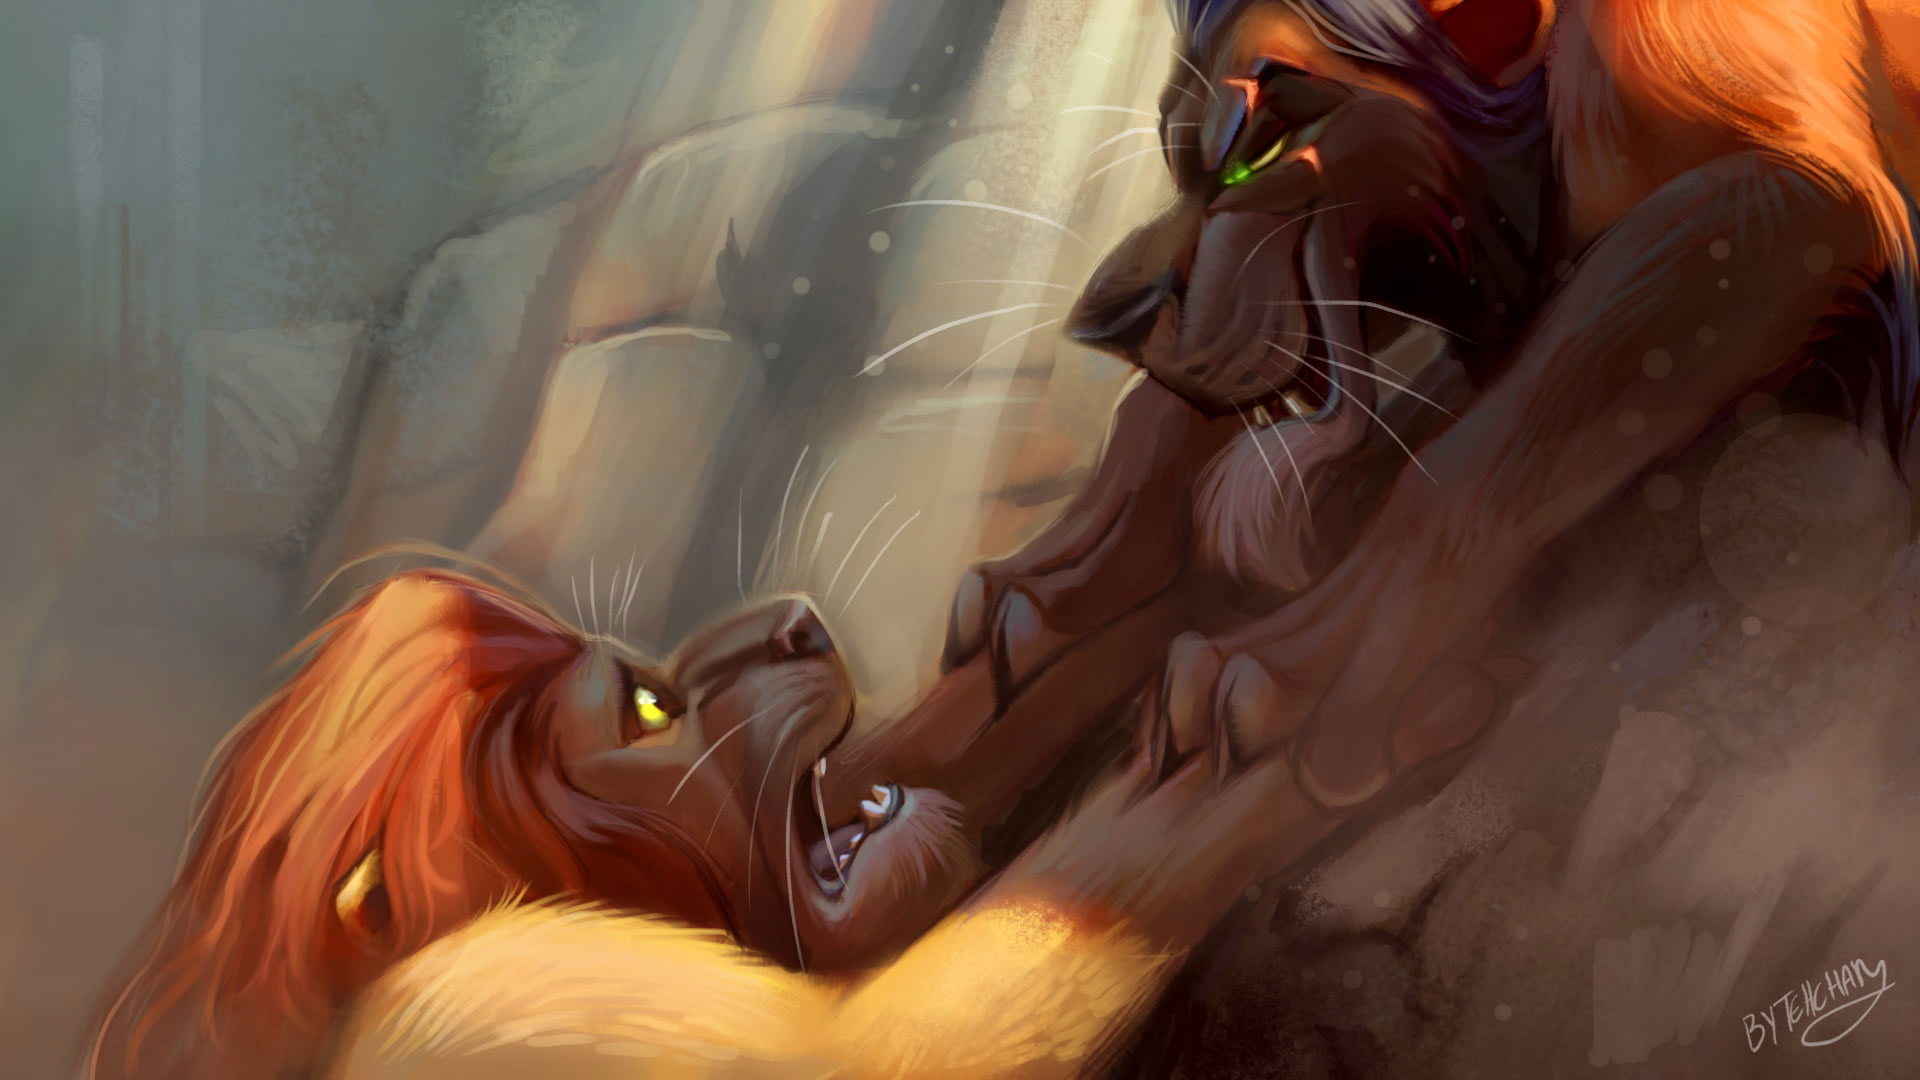 Lion King illustration wallpaper, The Lion King, animals, Mufasa, movies